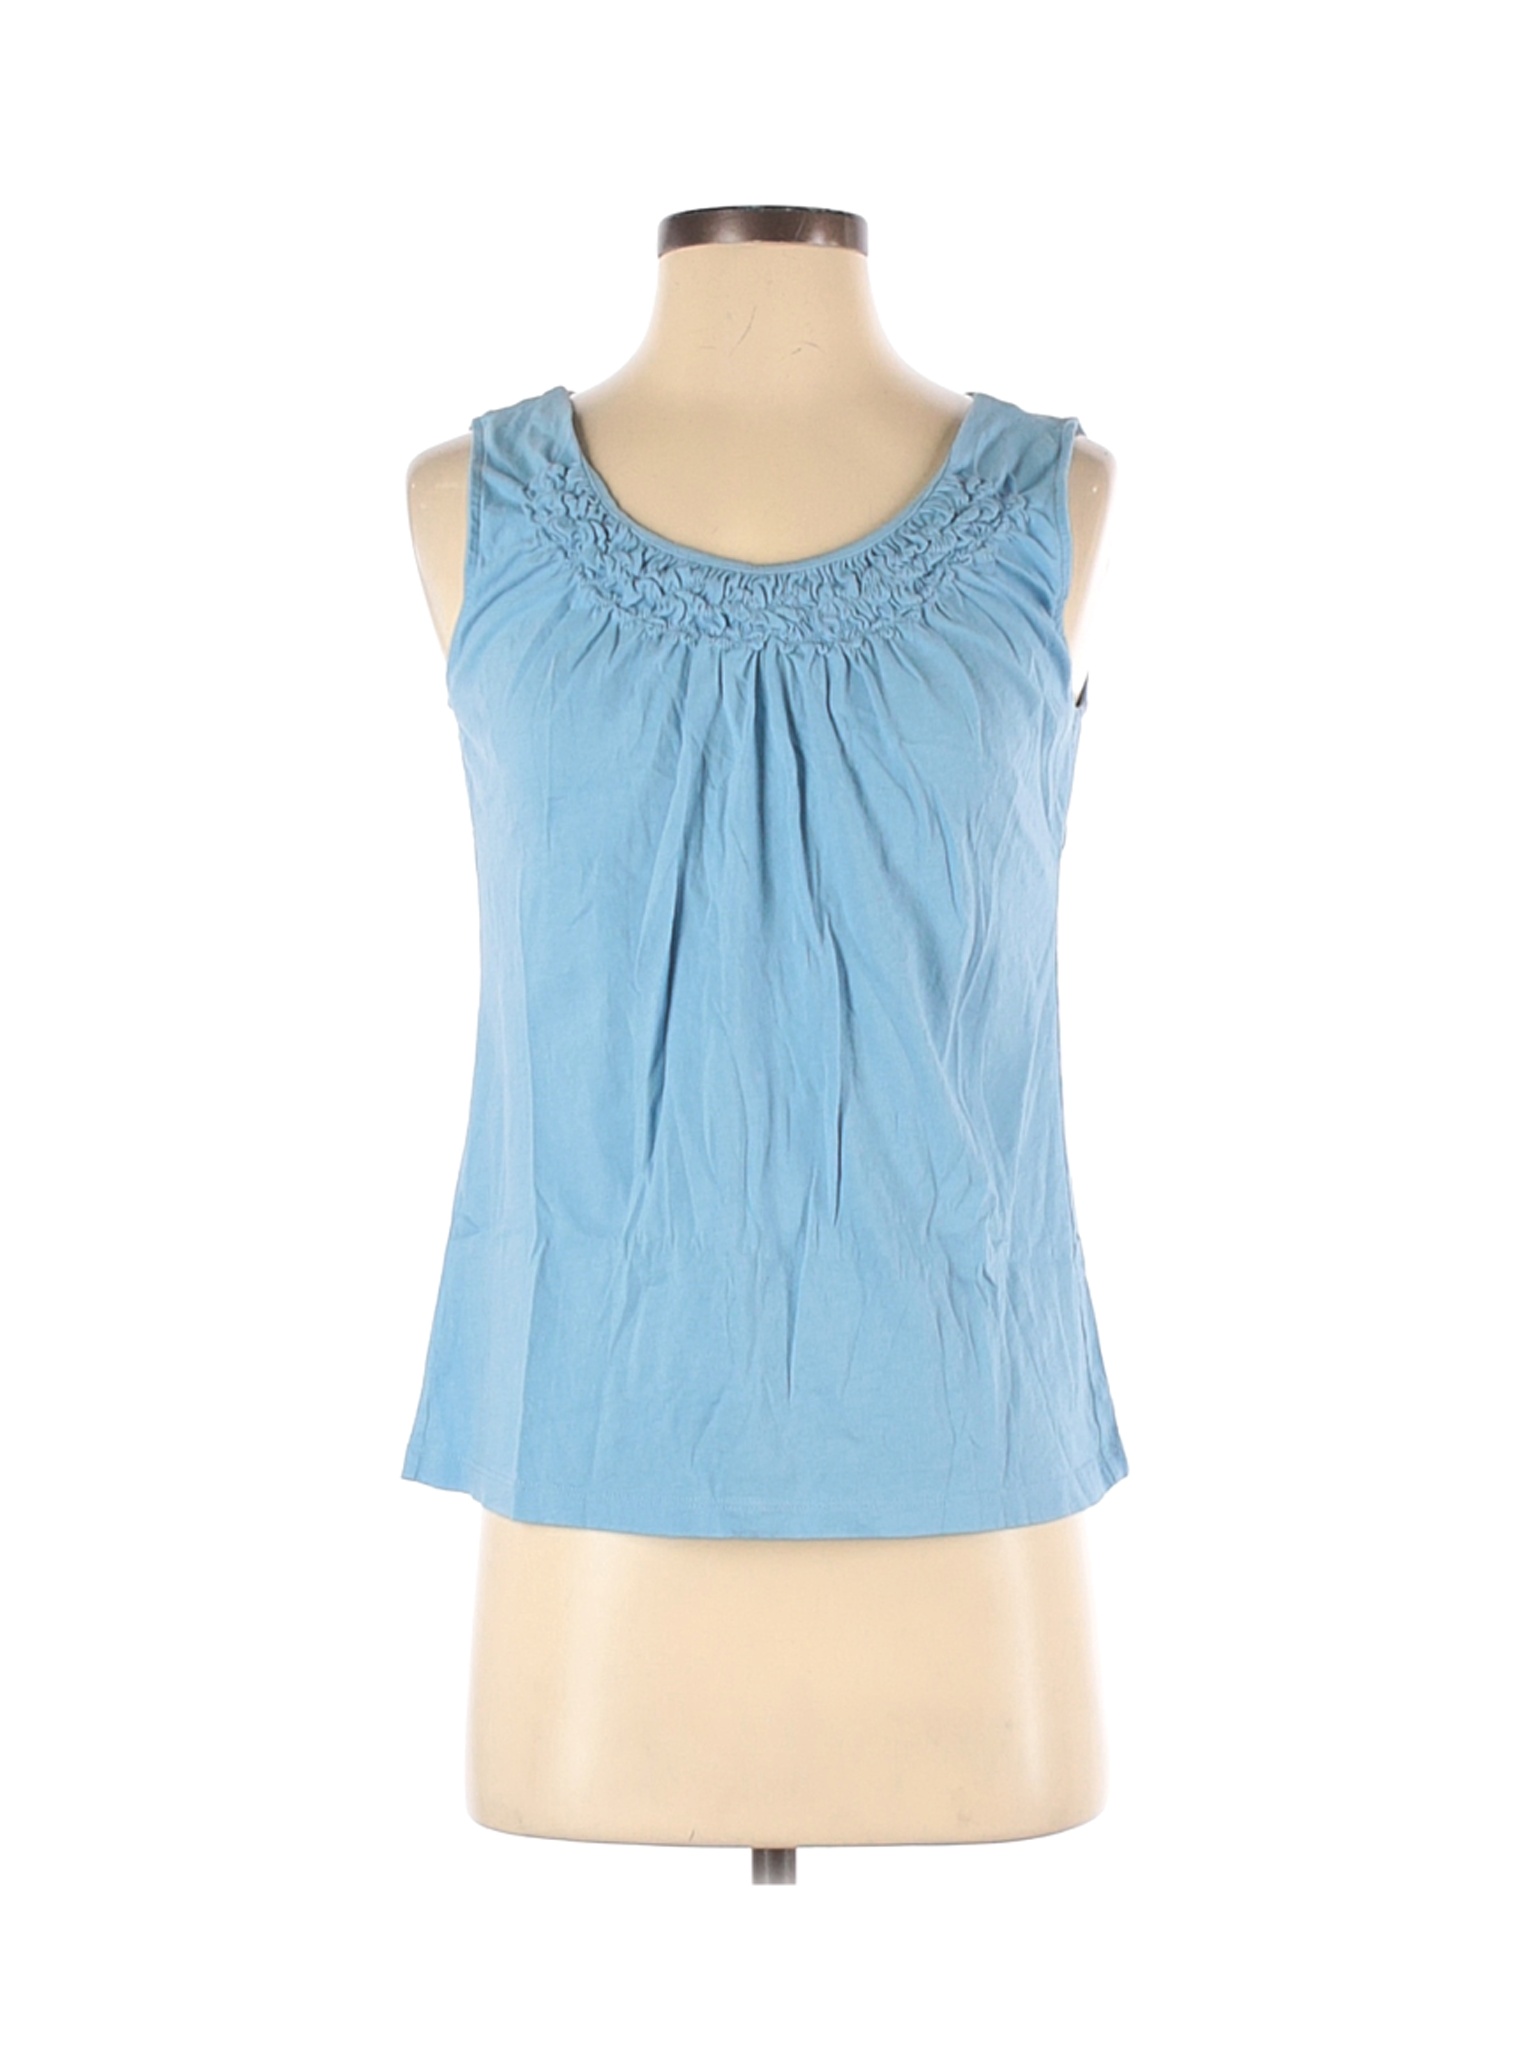 Ann Taylor LOFT Outlet Women Blue Sleeveless Top S | eBay